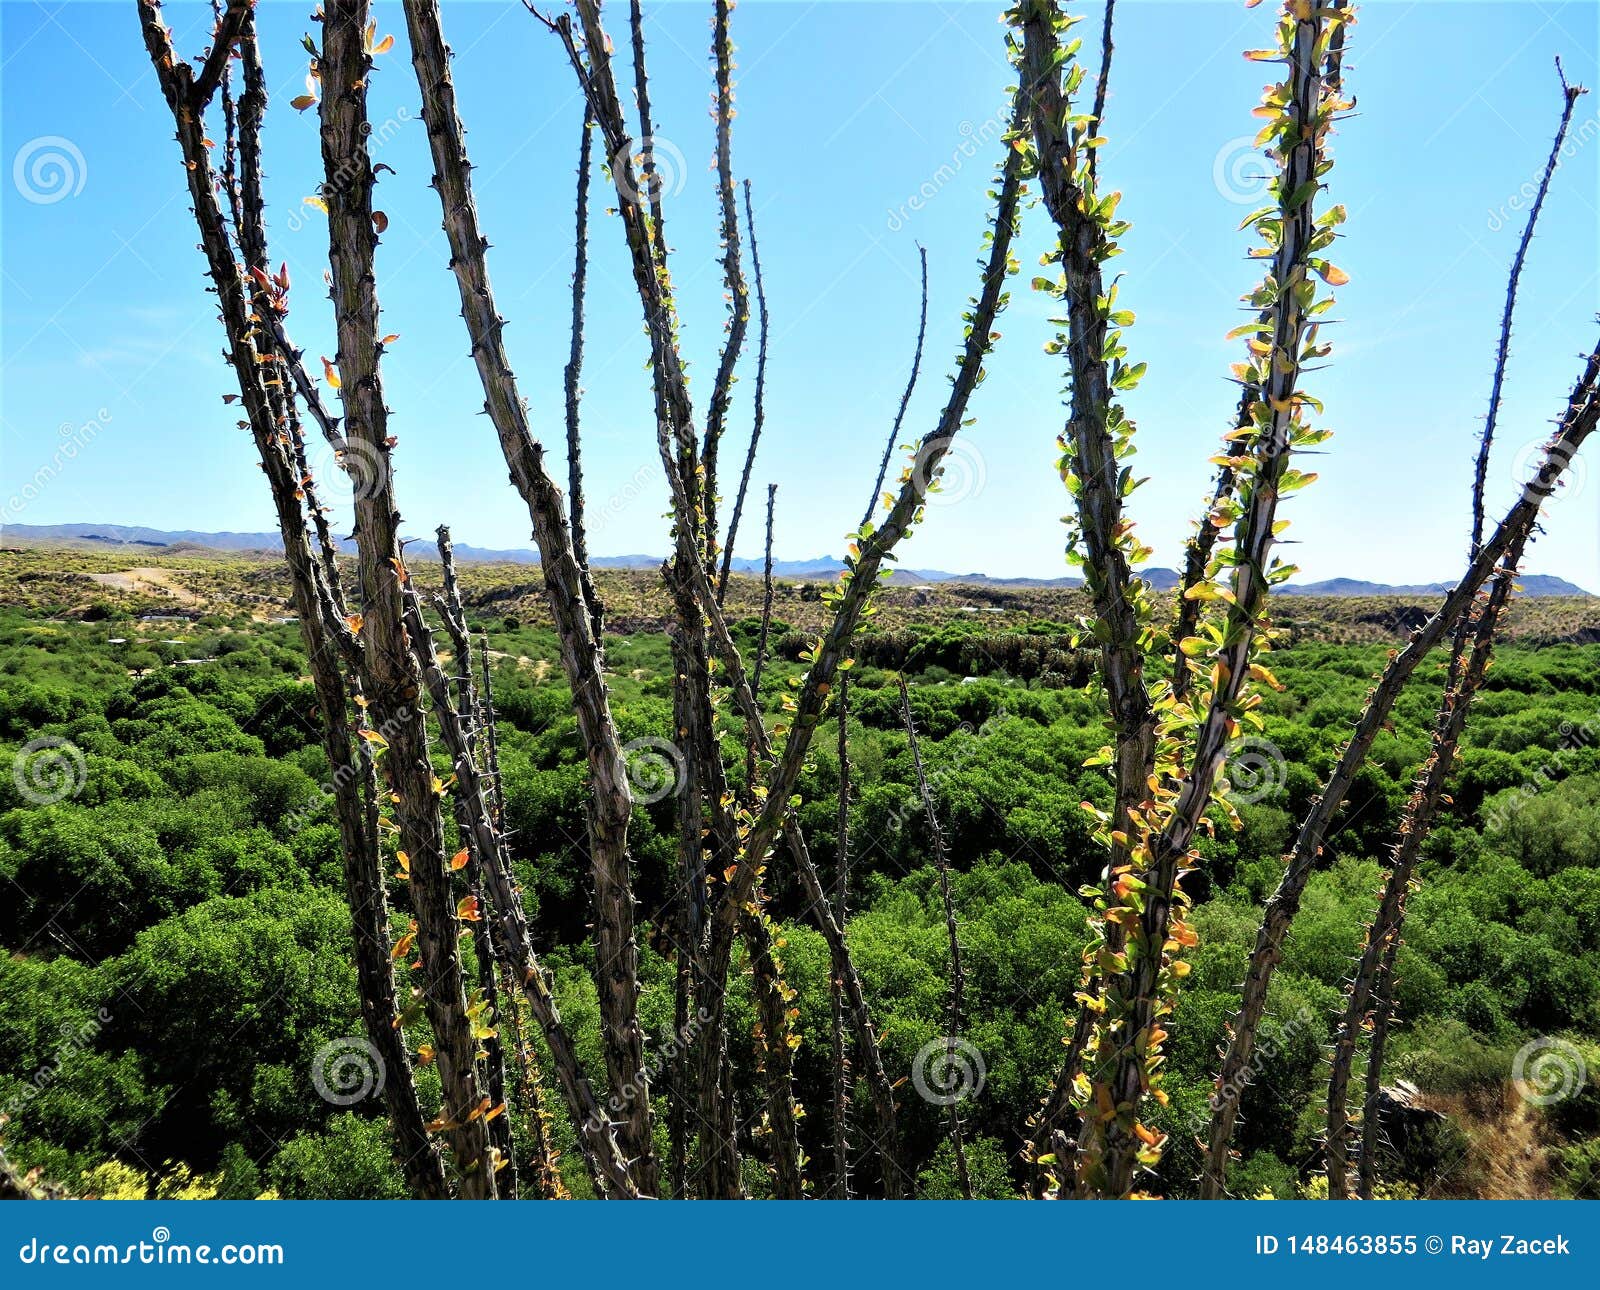 ocotillo branches, arizona